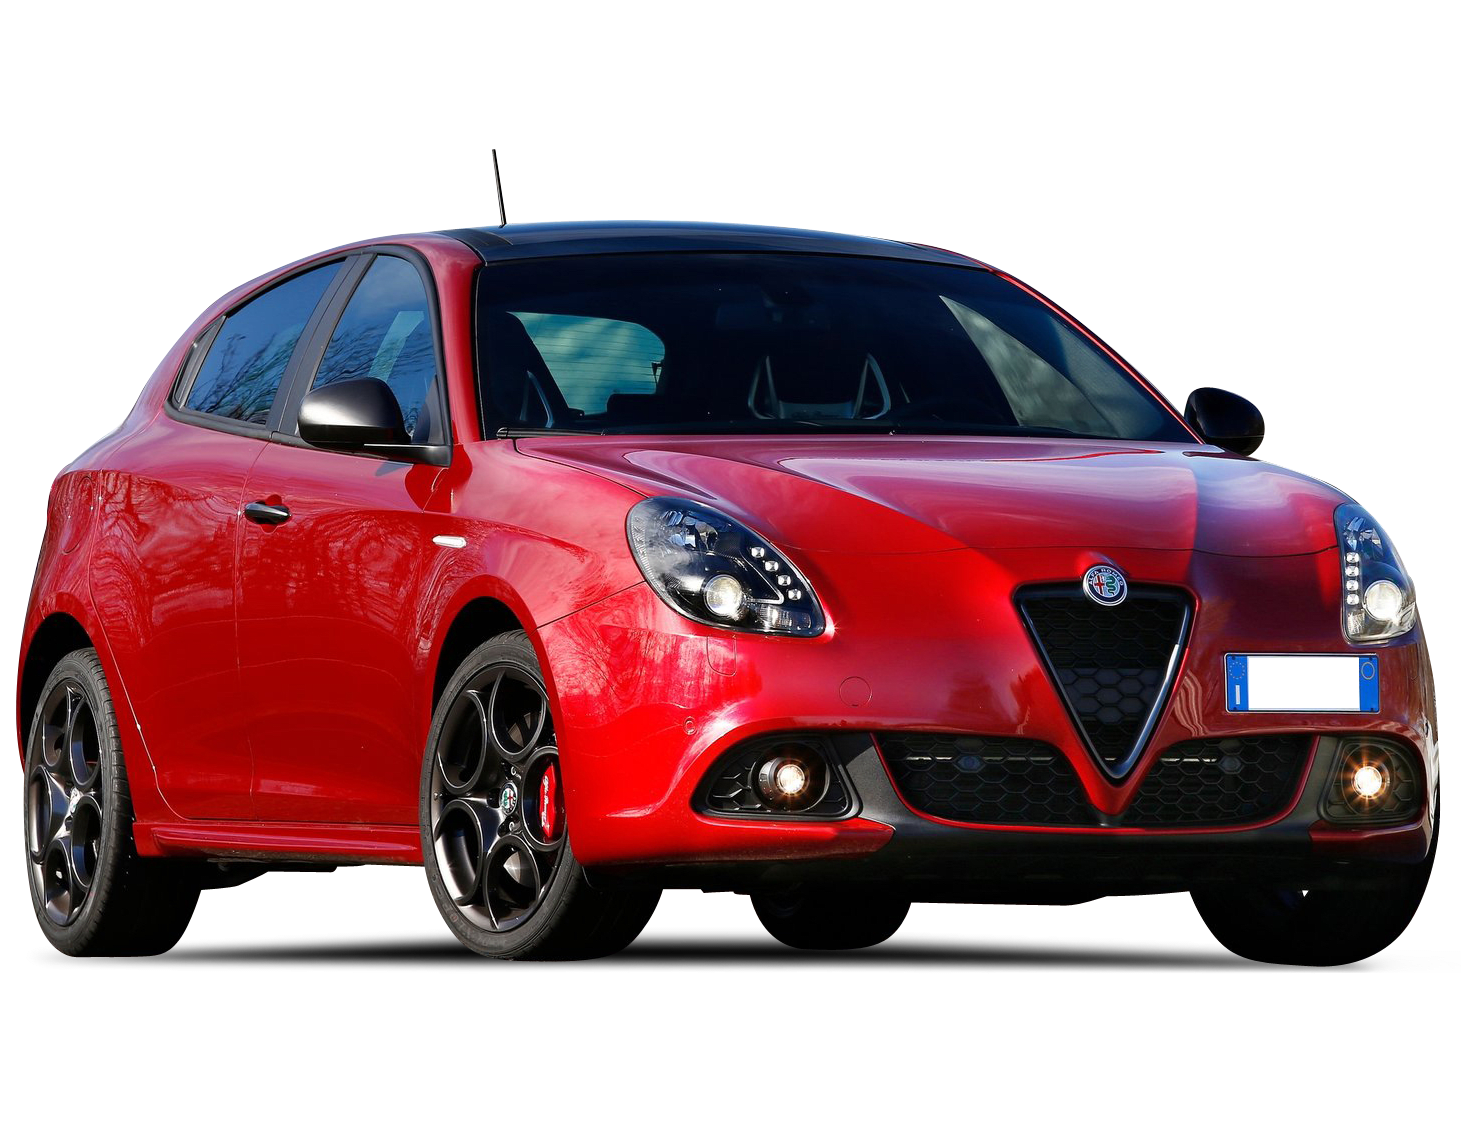 https://carsguide-res.cloudinary.com/image/upload/f_auto,fl_lossy,q_auto,t_default/v1/editorial/vhs/Alfa-Romeo-Giulietta_0.png